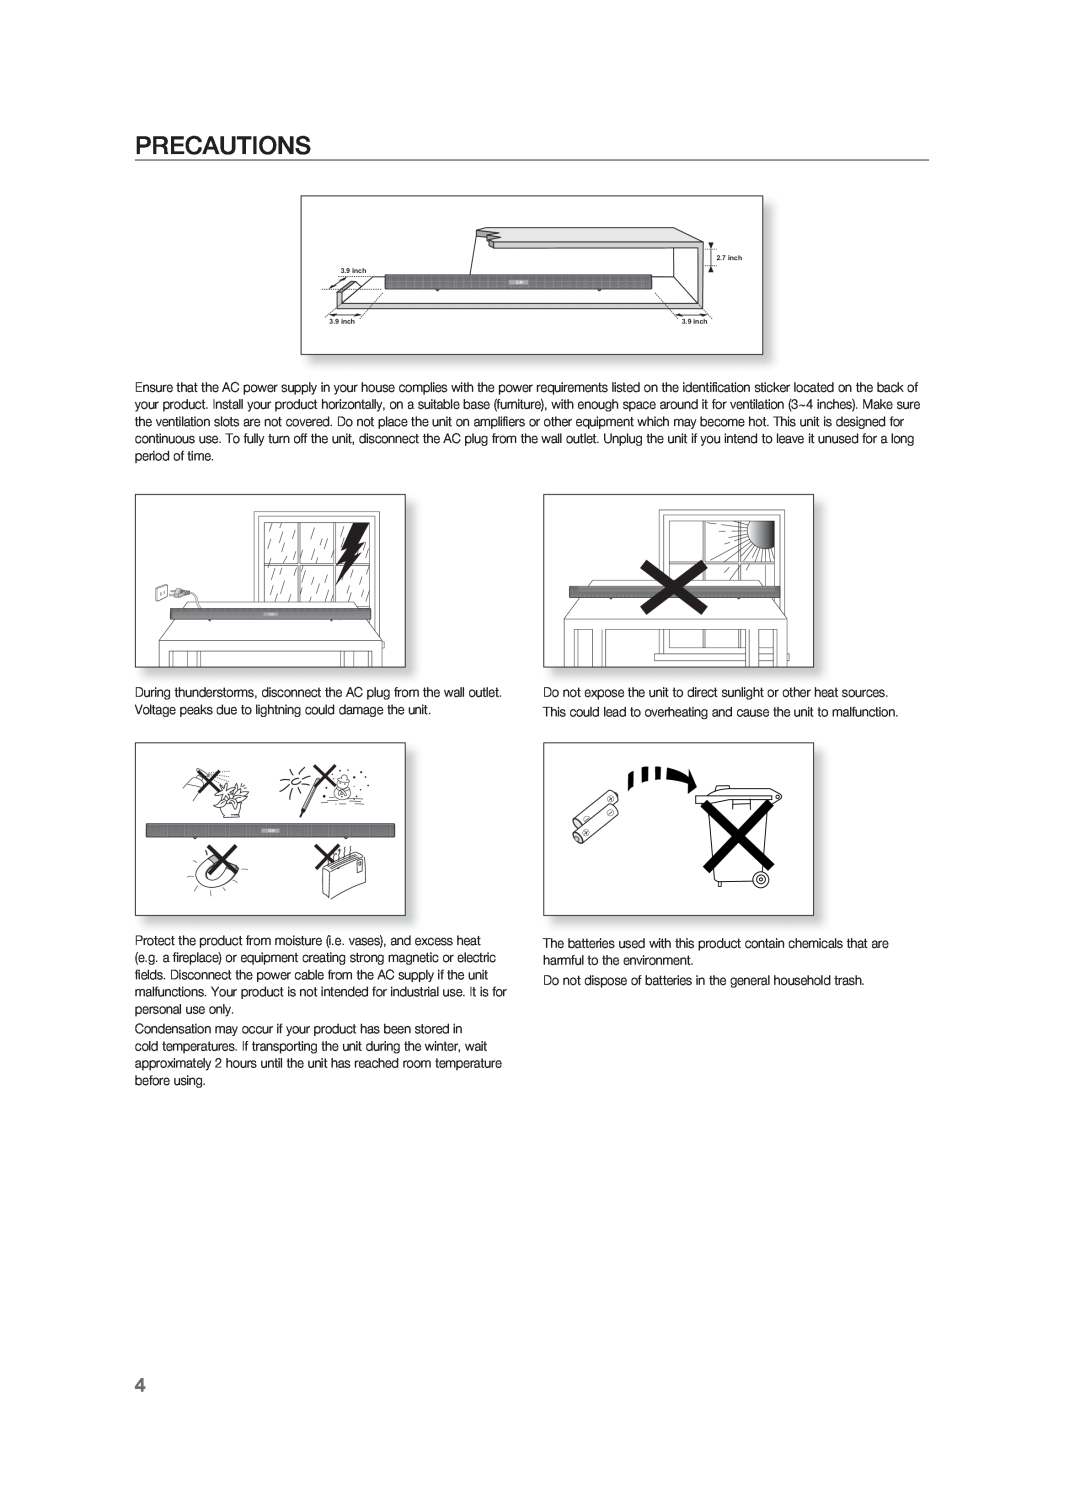 Samsung HW-F850/ZA user manual Precautions, inch 3.9 inch 